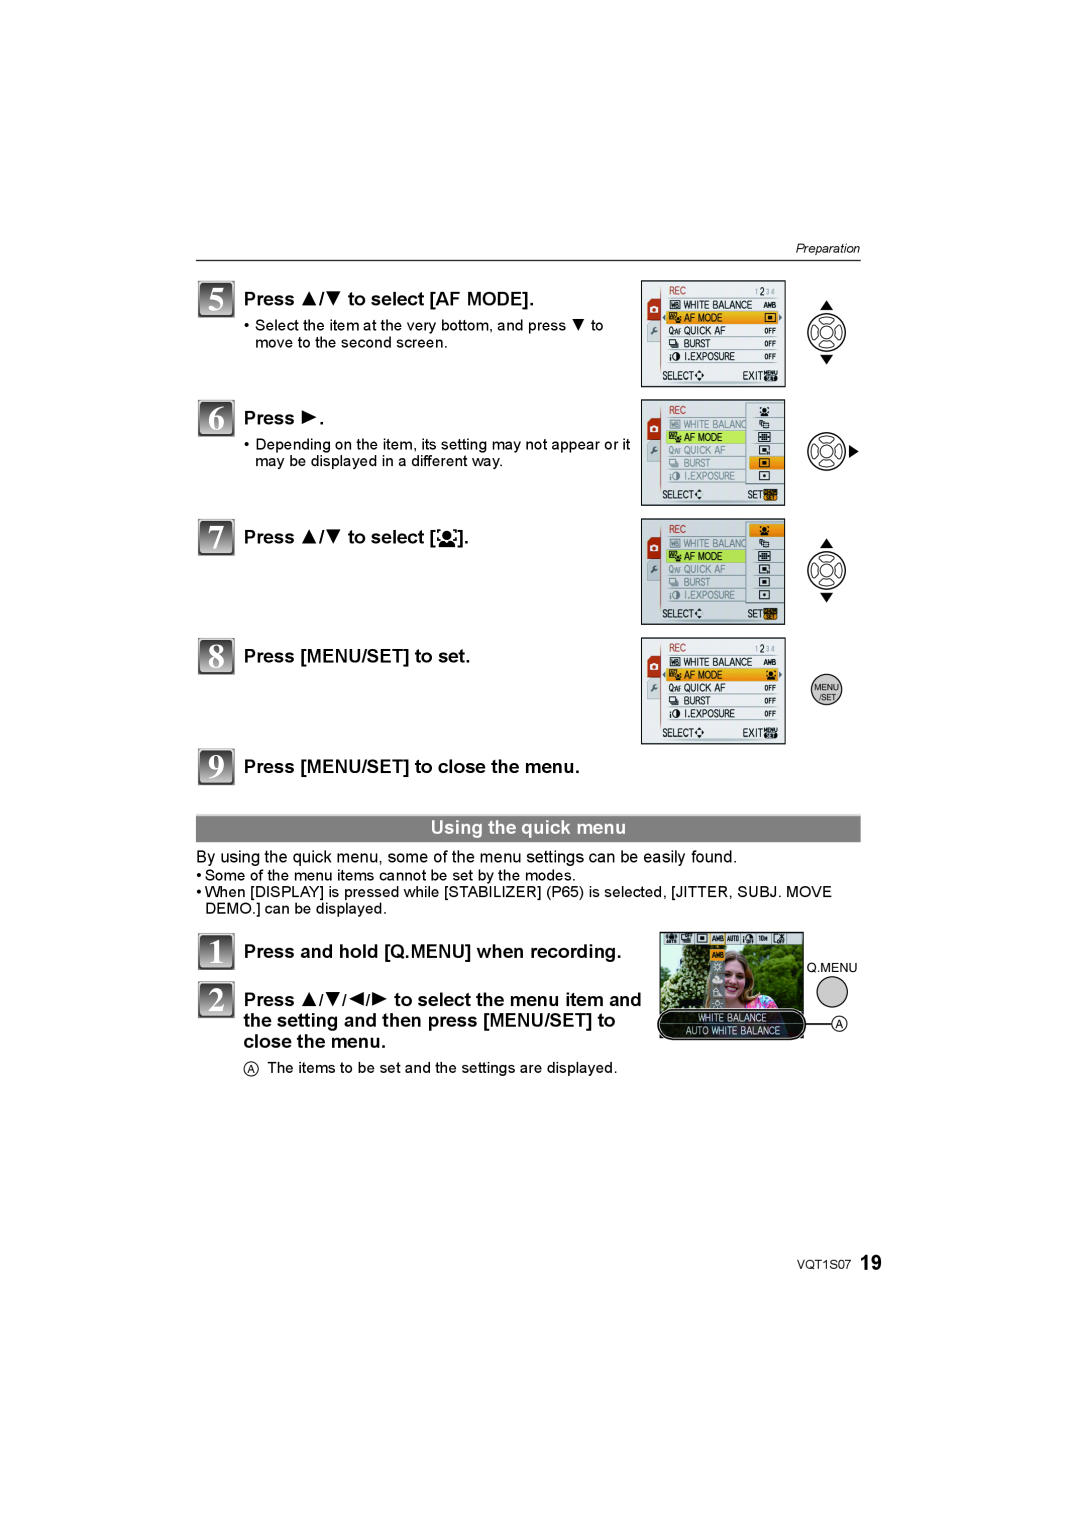 Panasonic DMC-FX38 Press 3/4 to select AF MODE, Press 3/4 to select š Press MENU/SET to set, Using the quick menu 